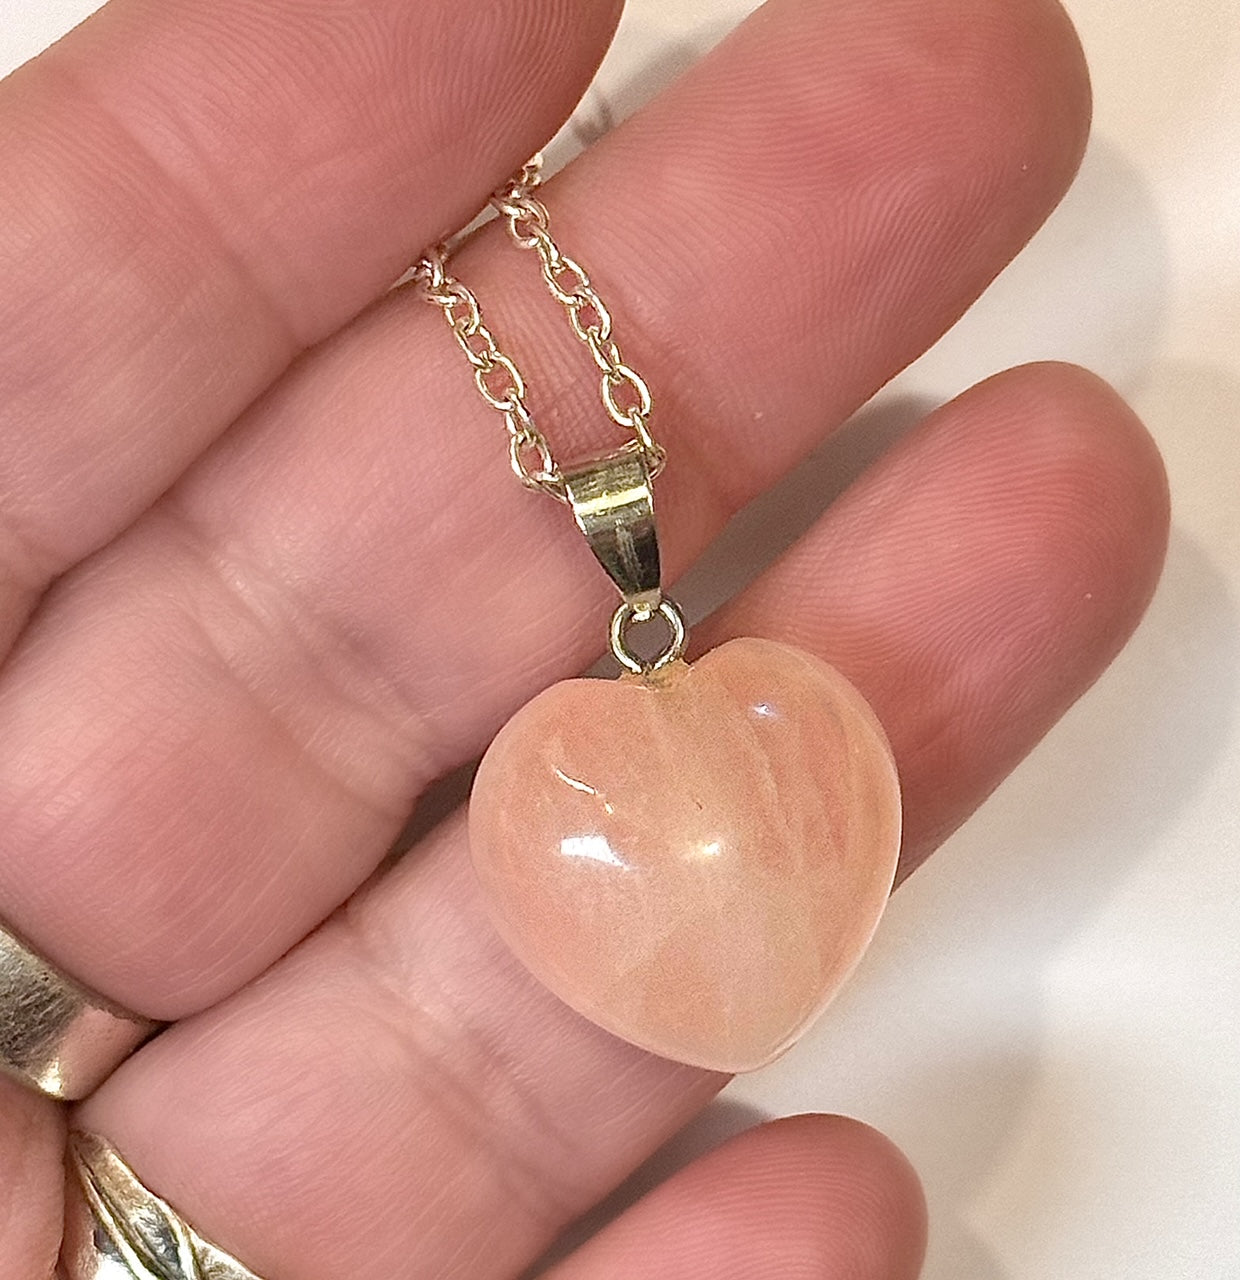 Heart of Stone Gemstone Pendant Necklaces